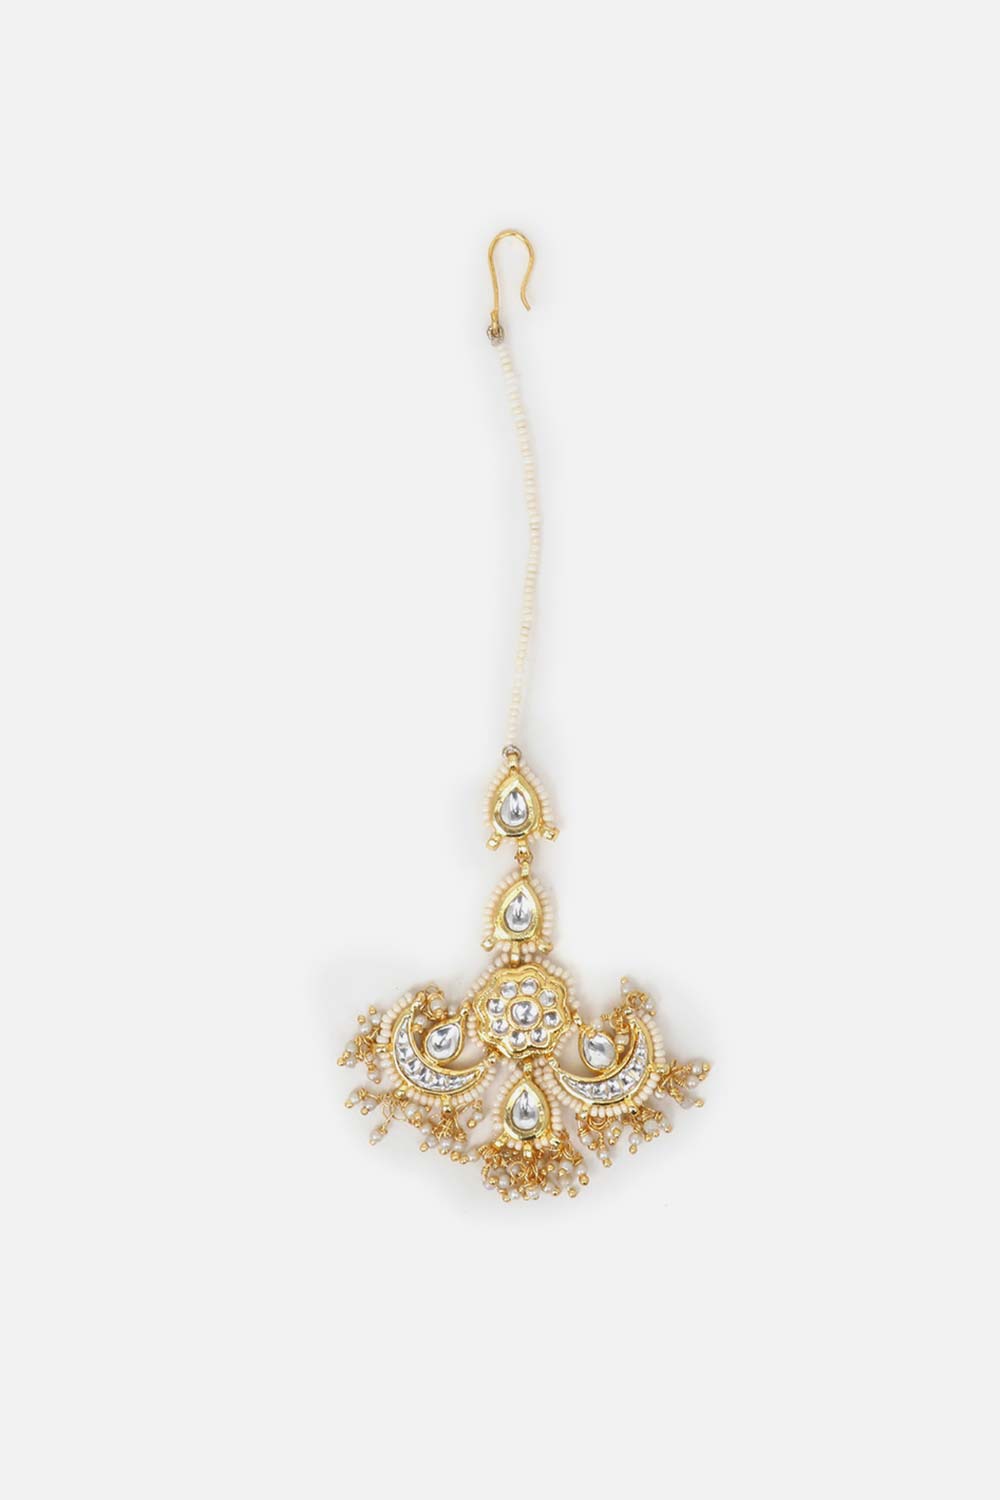 Cream And Gold Maang Tikka Head Jewellery With Kundan And Pearls